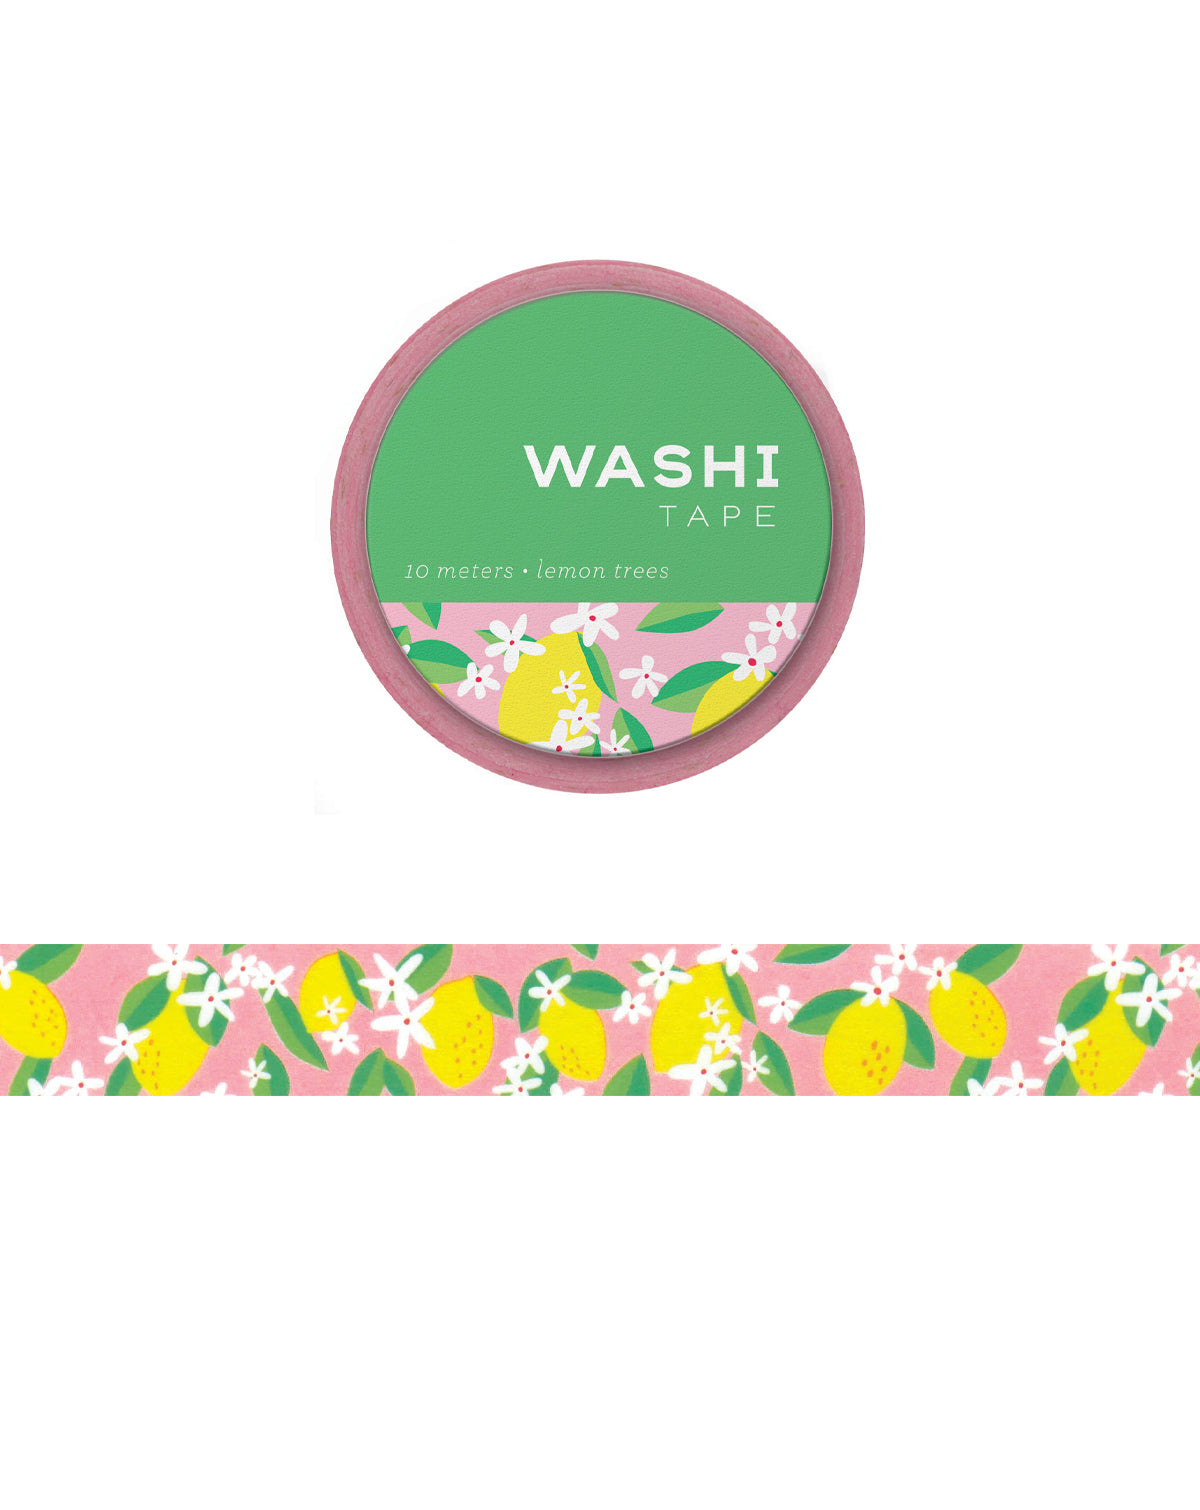 Washi Tape: Lemon Trees